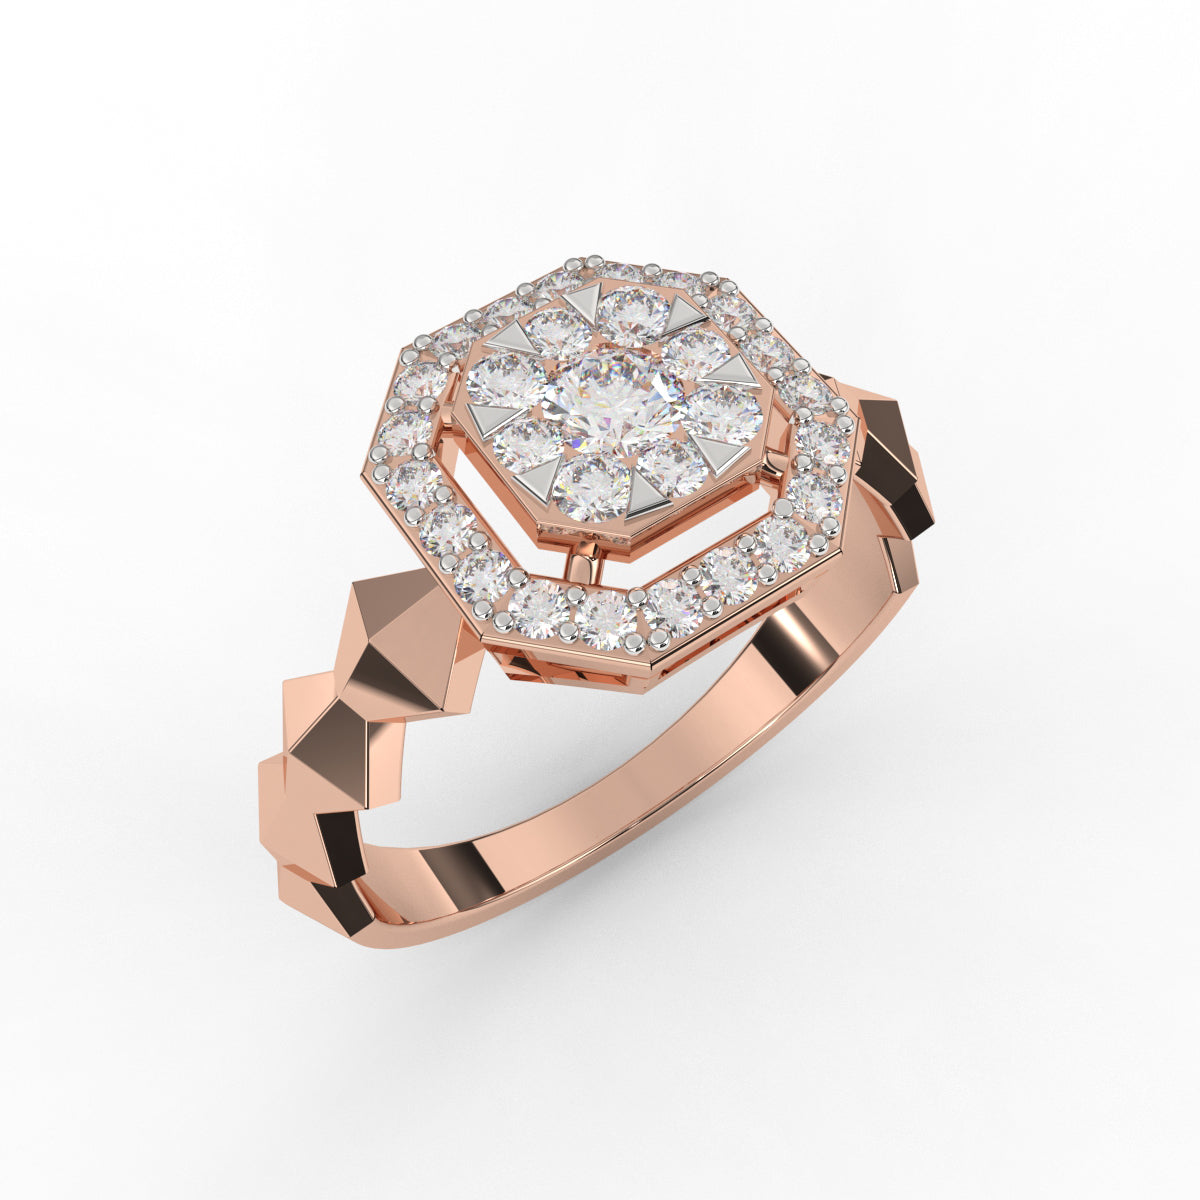 Buy Opal Diamond Rings Online in India | Kasturi Diamond